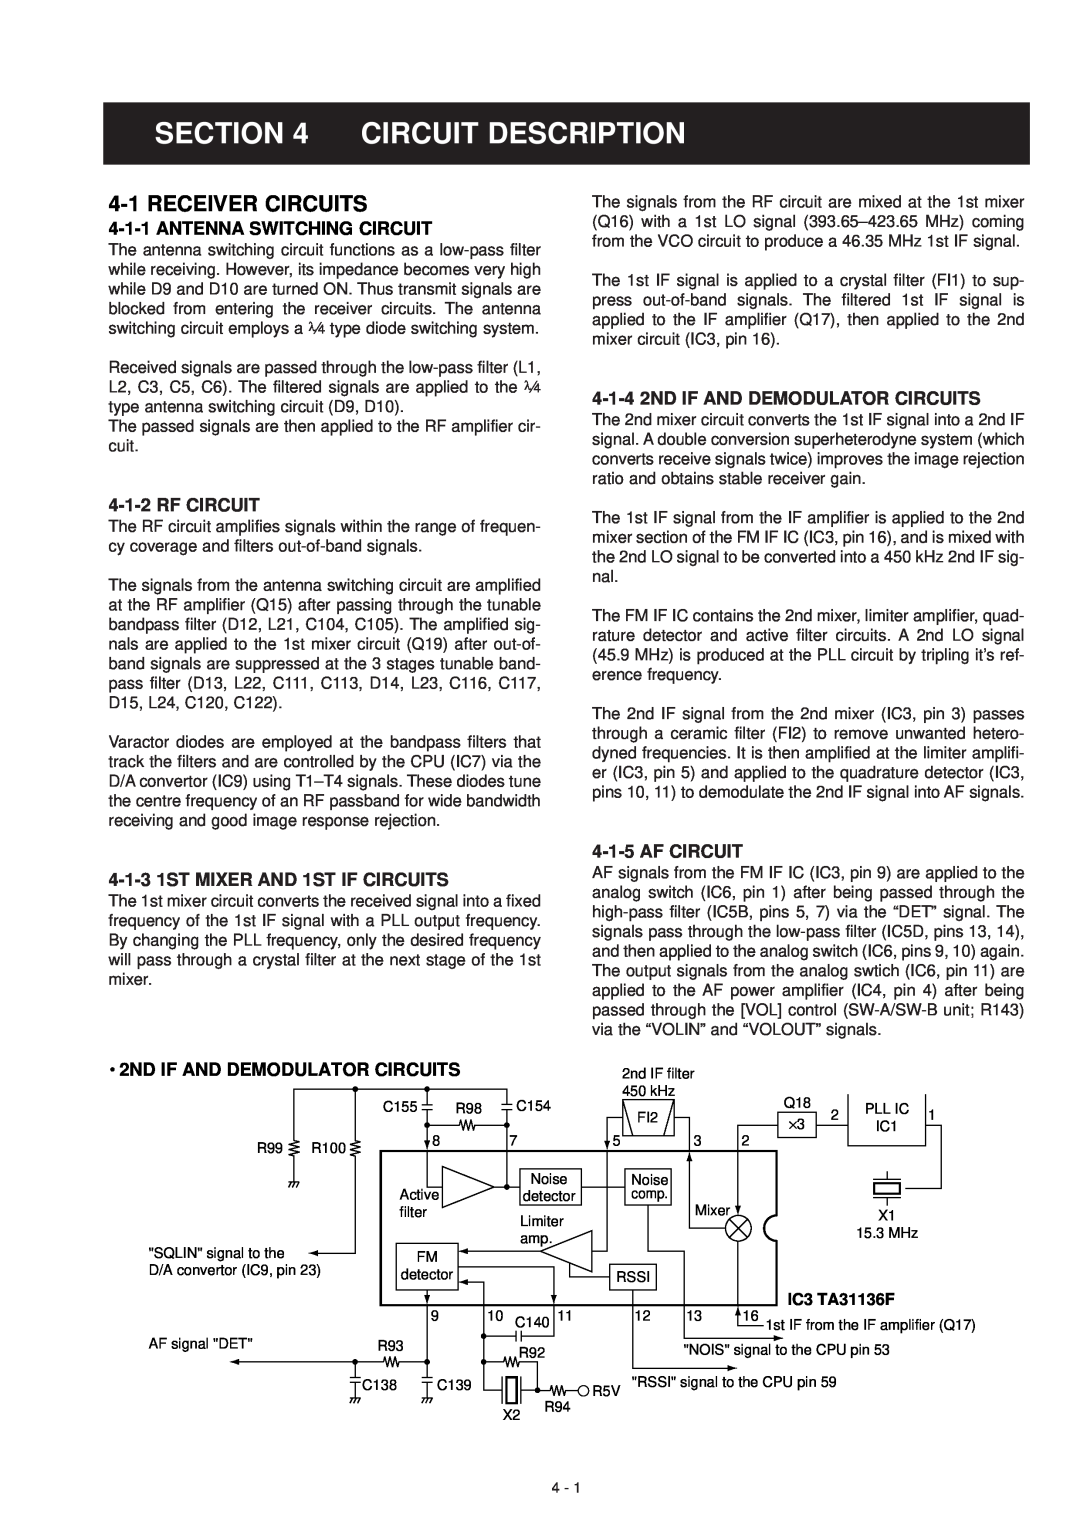 Icom IC-F21 Circuit Description, Receiver Circuits, Antenna Switching Circuit, 4-1-4 2ND IF AND DEMODULATOR CIRCUITS 